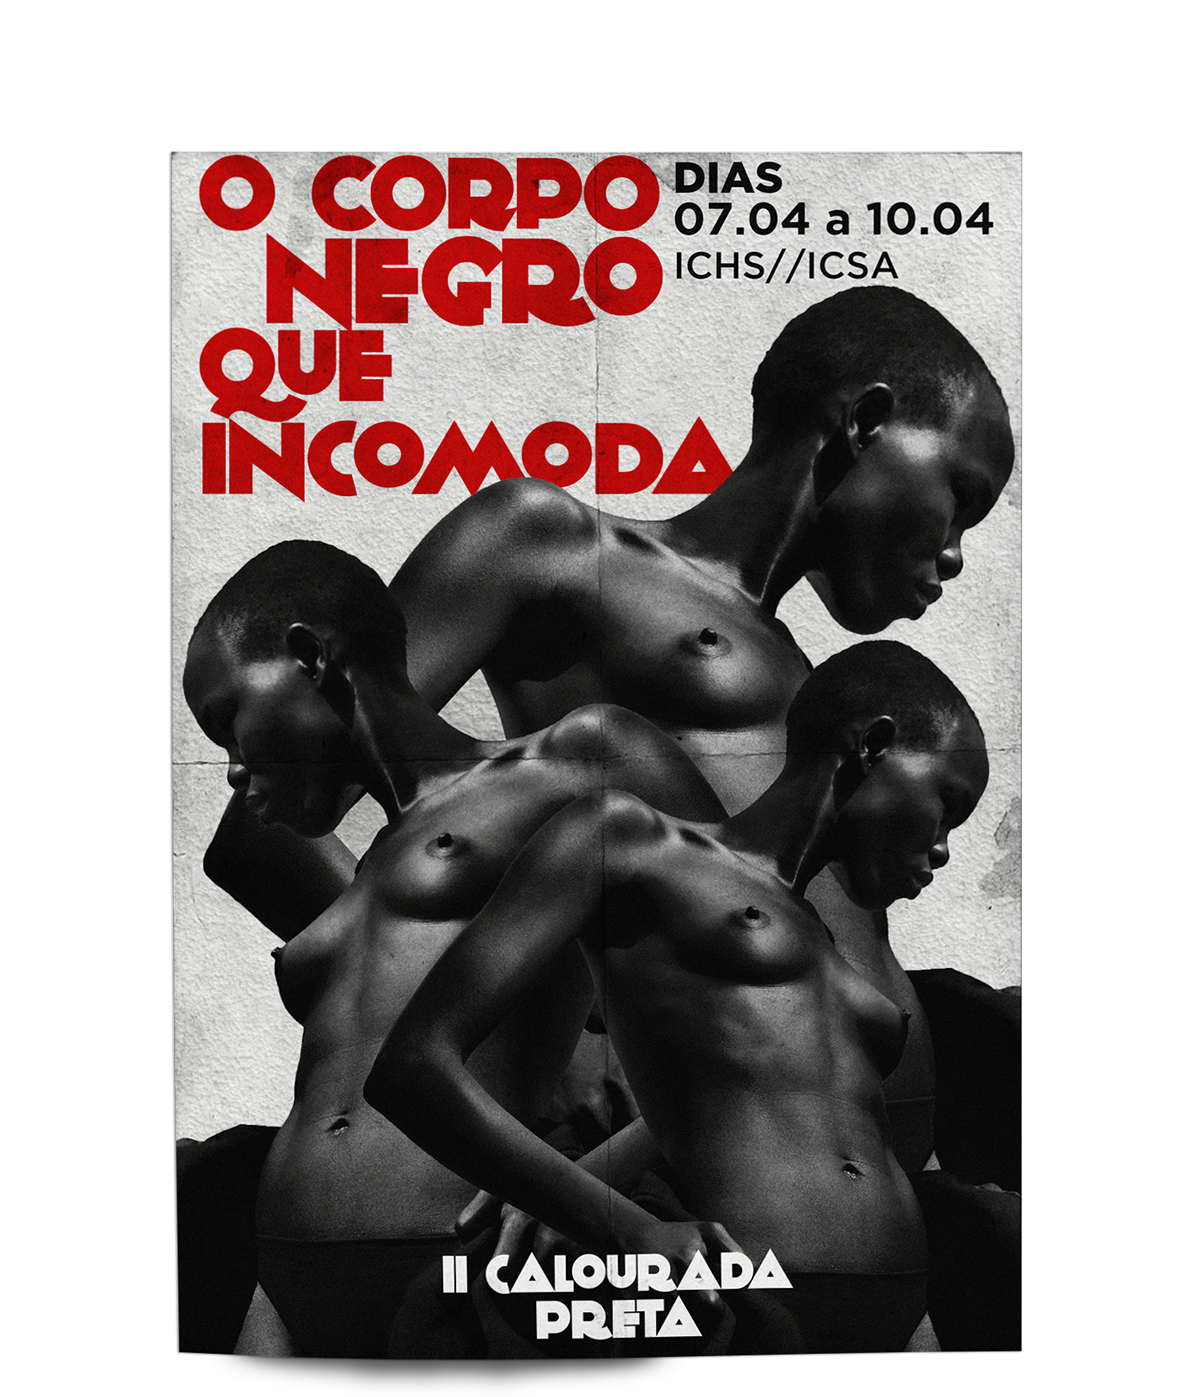 #afro #Negritude #Blackpower #Poster #black #cartaz  #negros